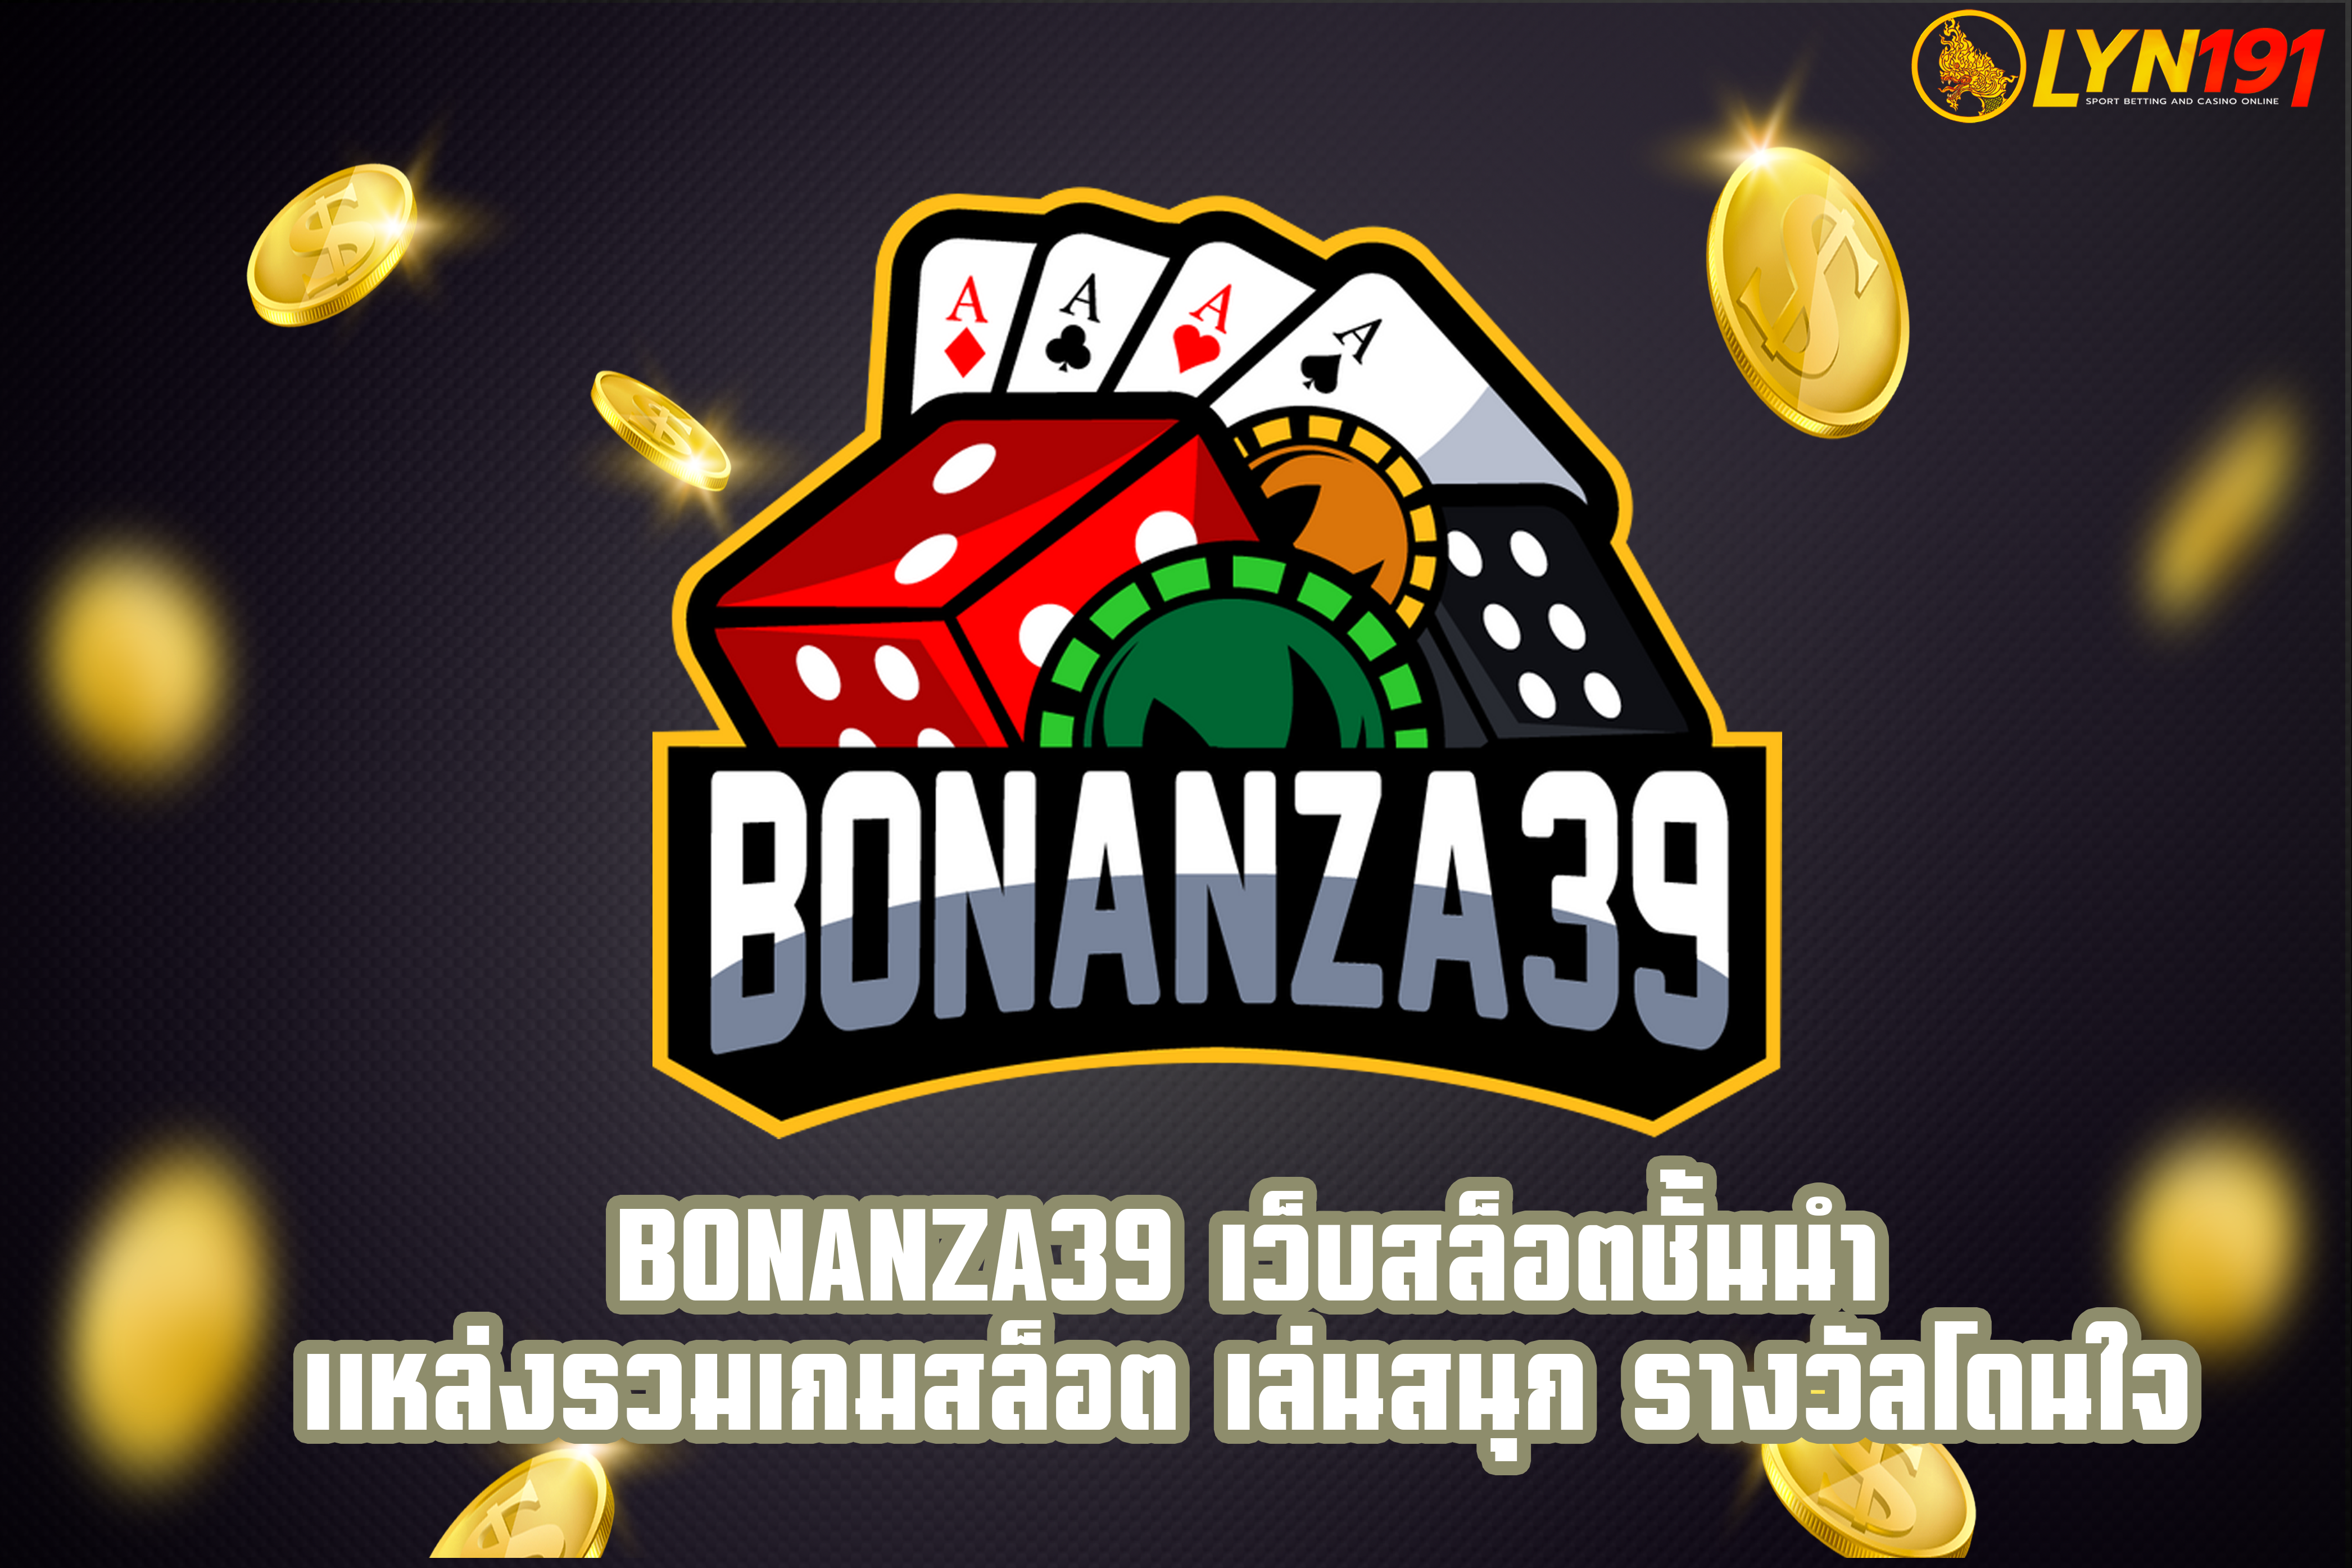 Bonanza39 เว็บสล็อตชั้นนำ แหล่งรวมเกมสล็อต เล่นสนุก รางวัลโดนใจ